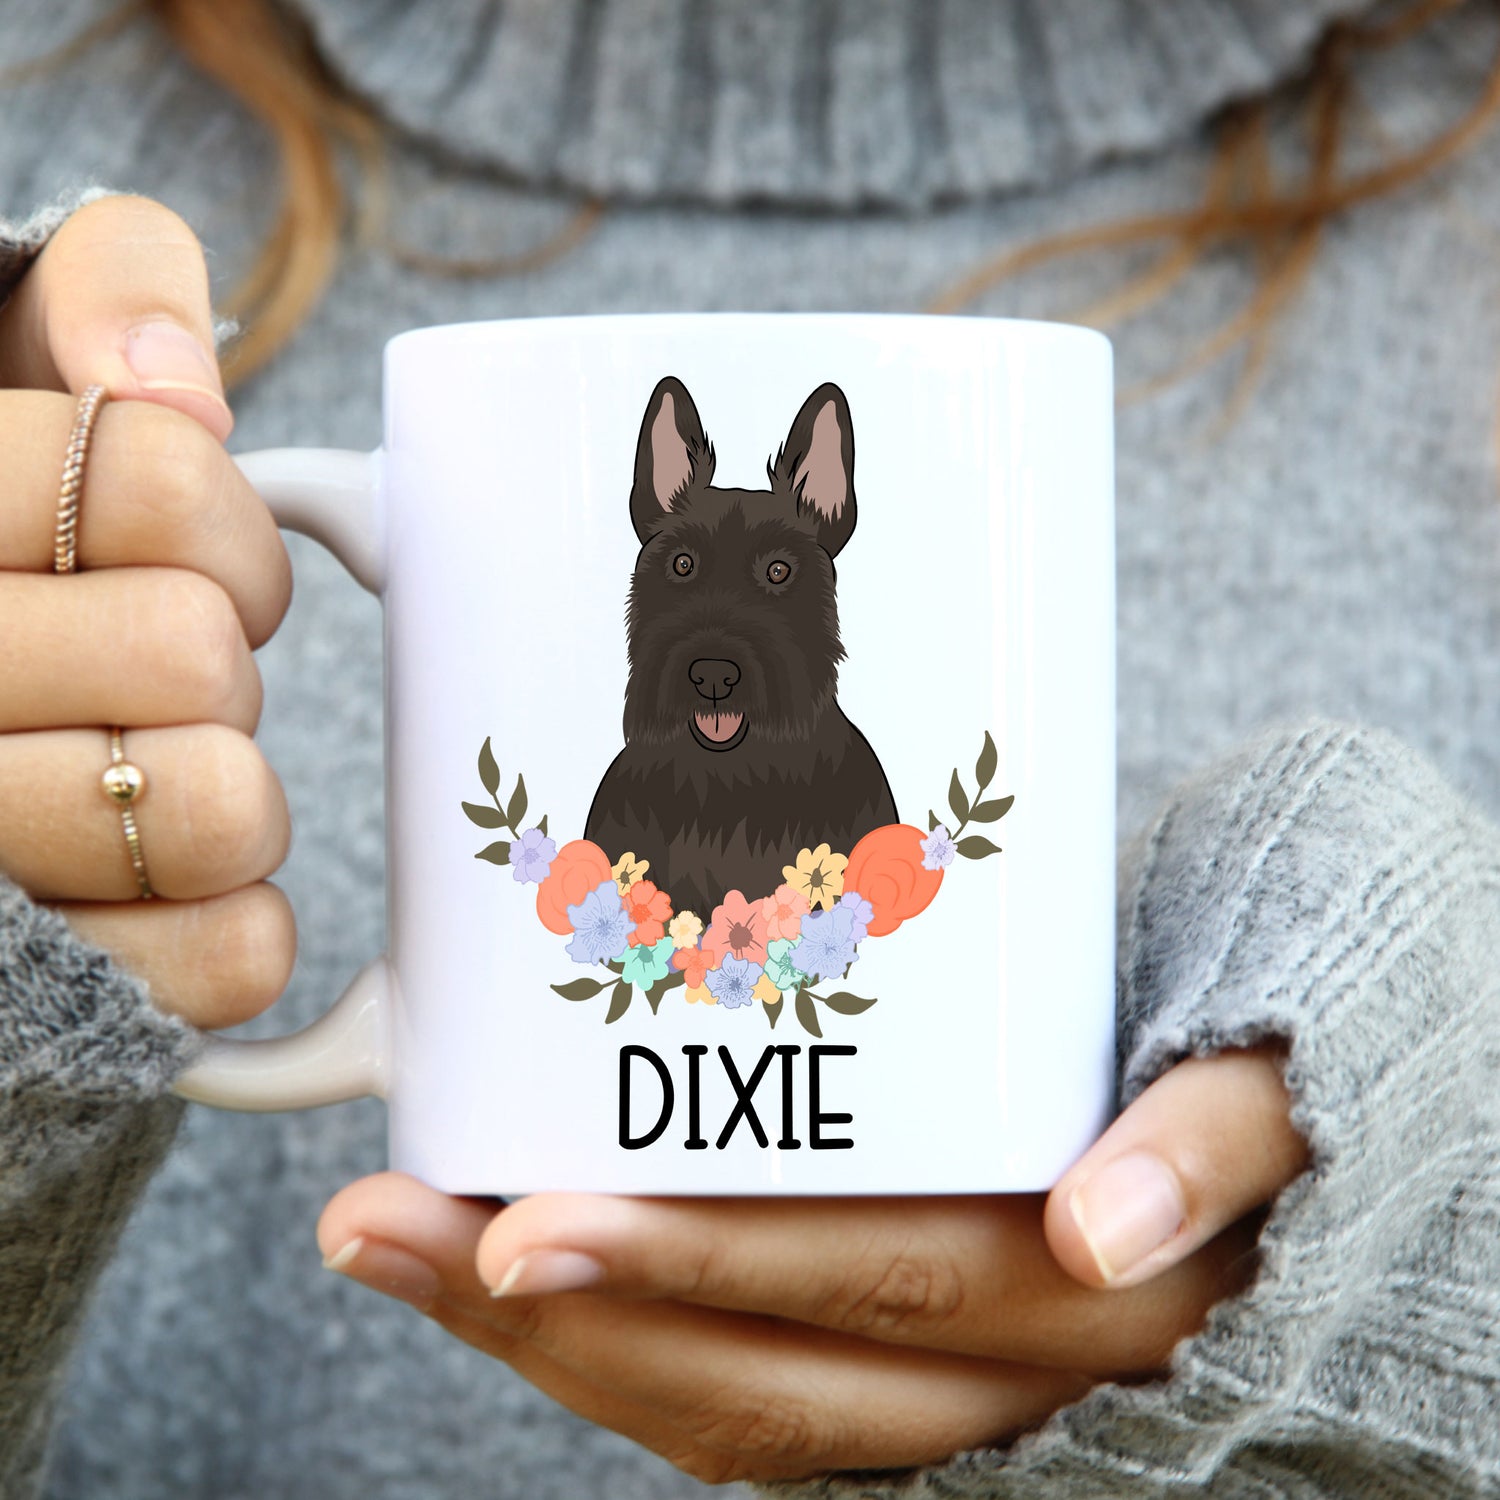 scottish-terrier-mug